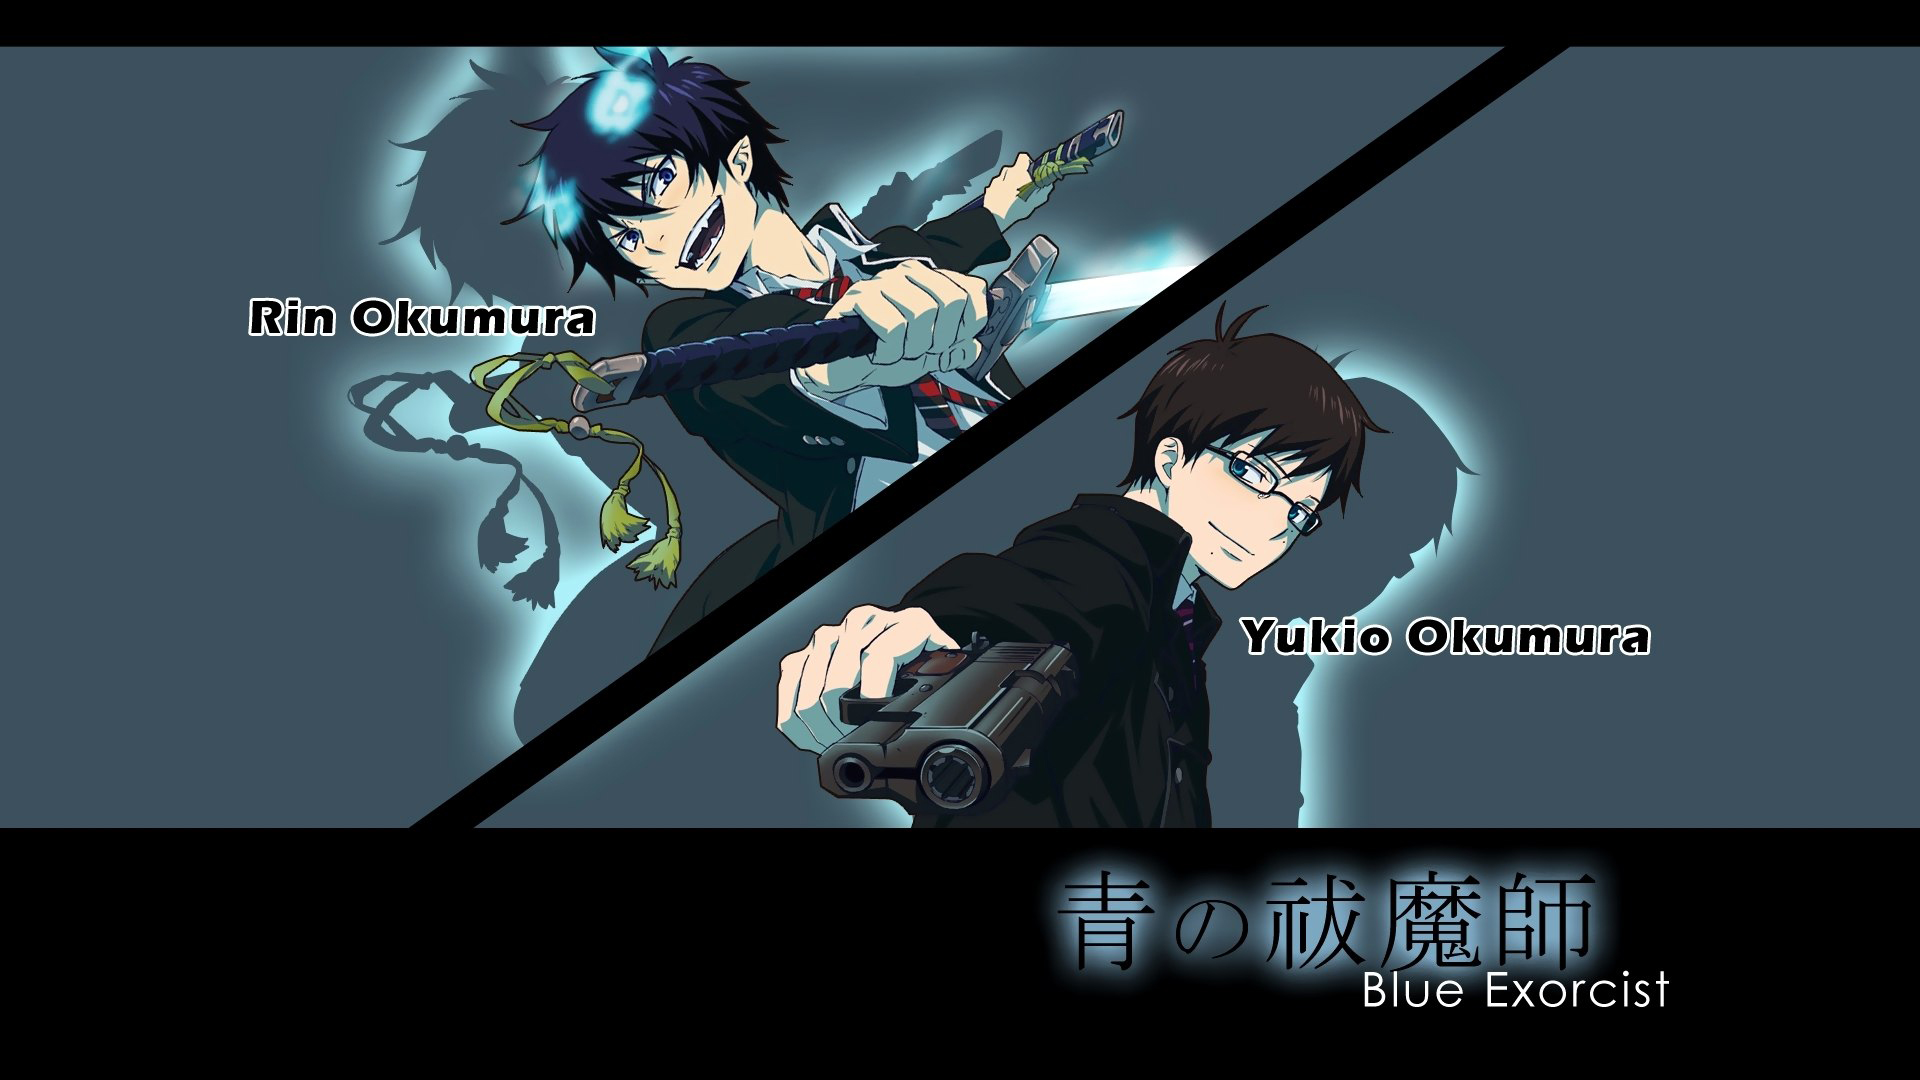 714769 descargar imagen animado, el exorcista azul, ao no exorcista, rin okumura, yukio okumura: fondos de pantalla y protectores de pantalla gratis